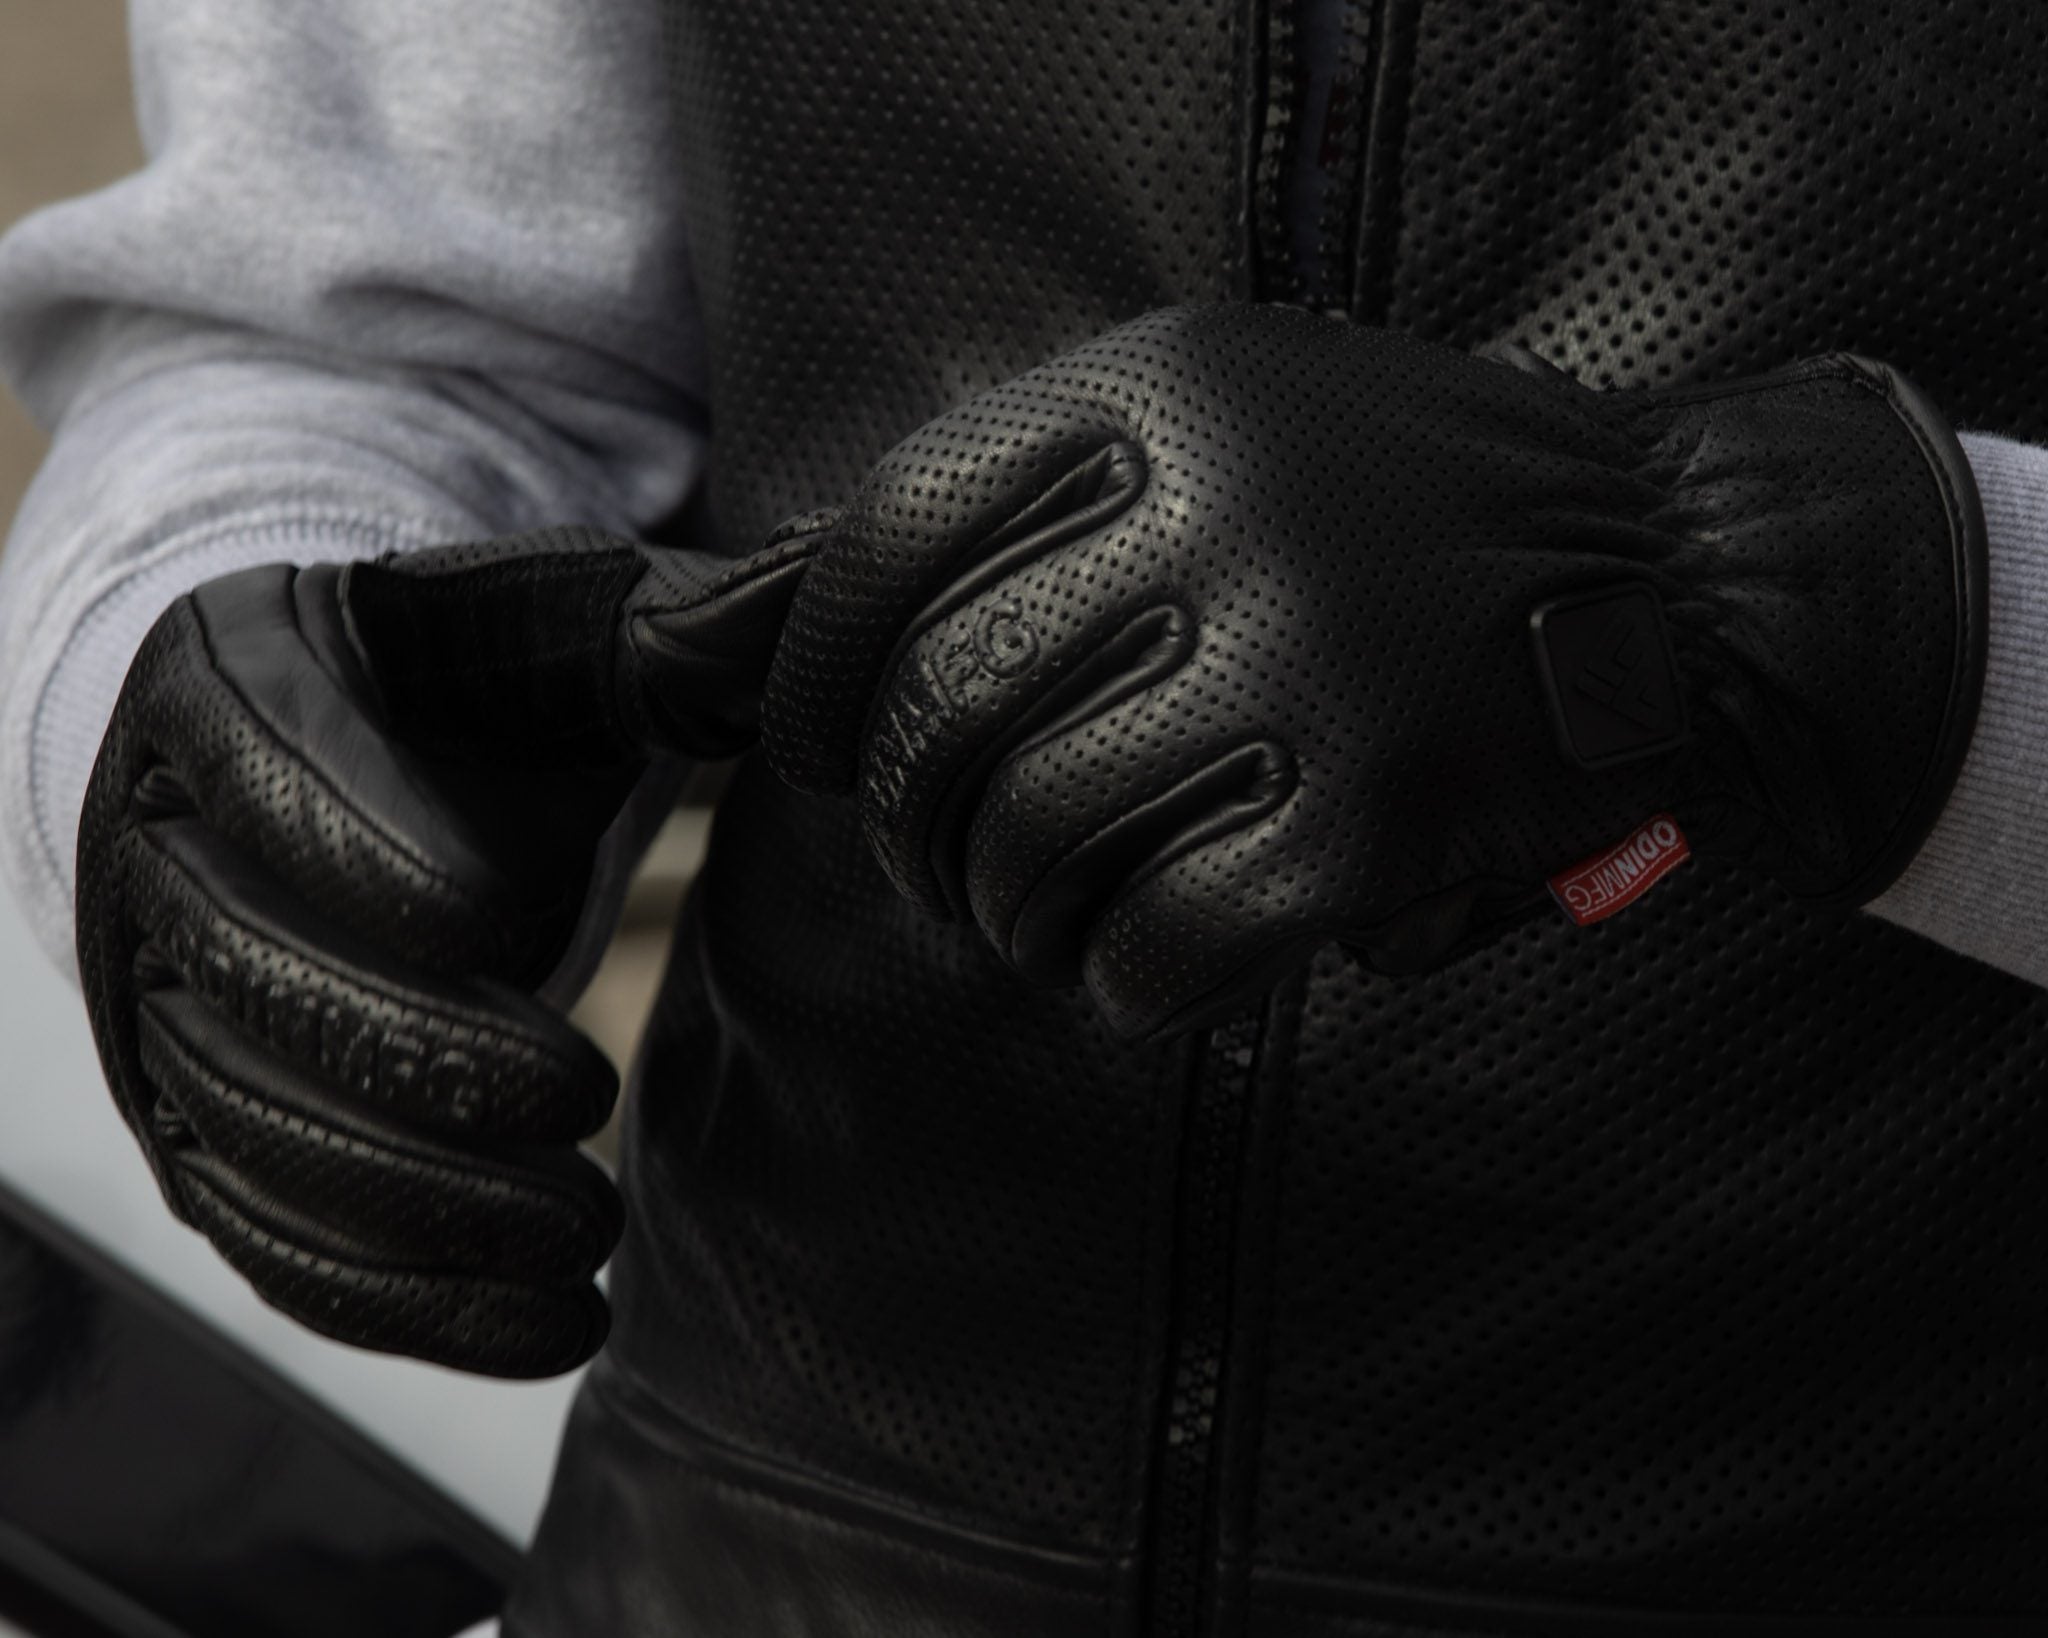 Odin Mfg Originals leather motorcycle gloves